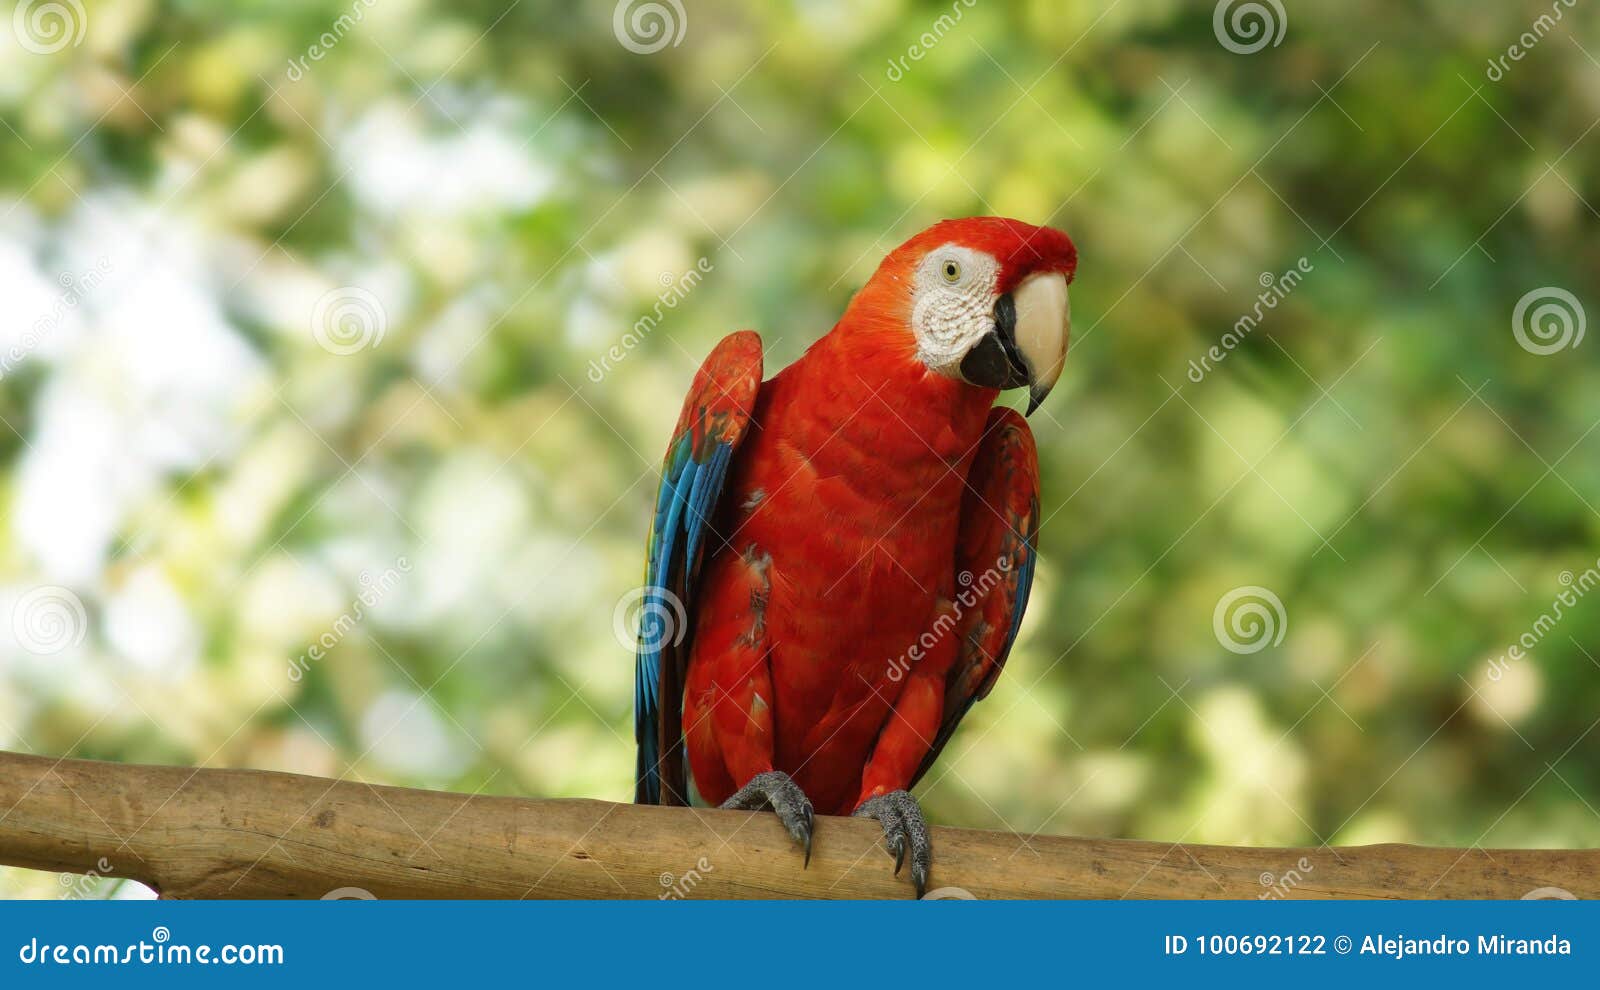 macaw on a branch in ecuadorian amazon. common names: guacamayo or papagayo